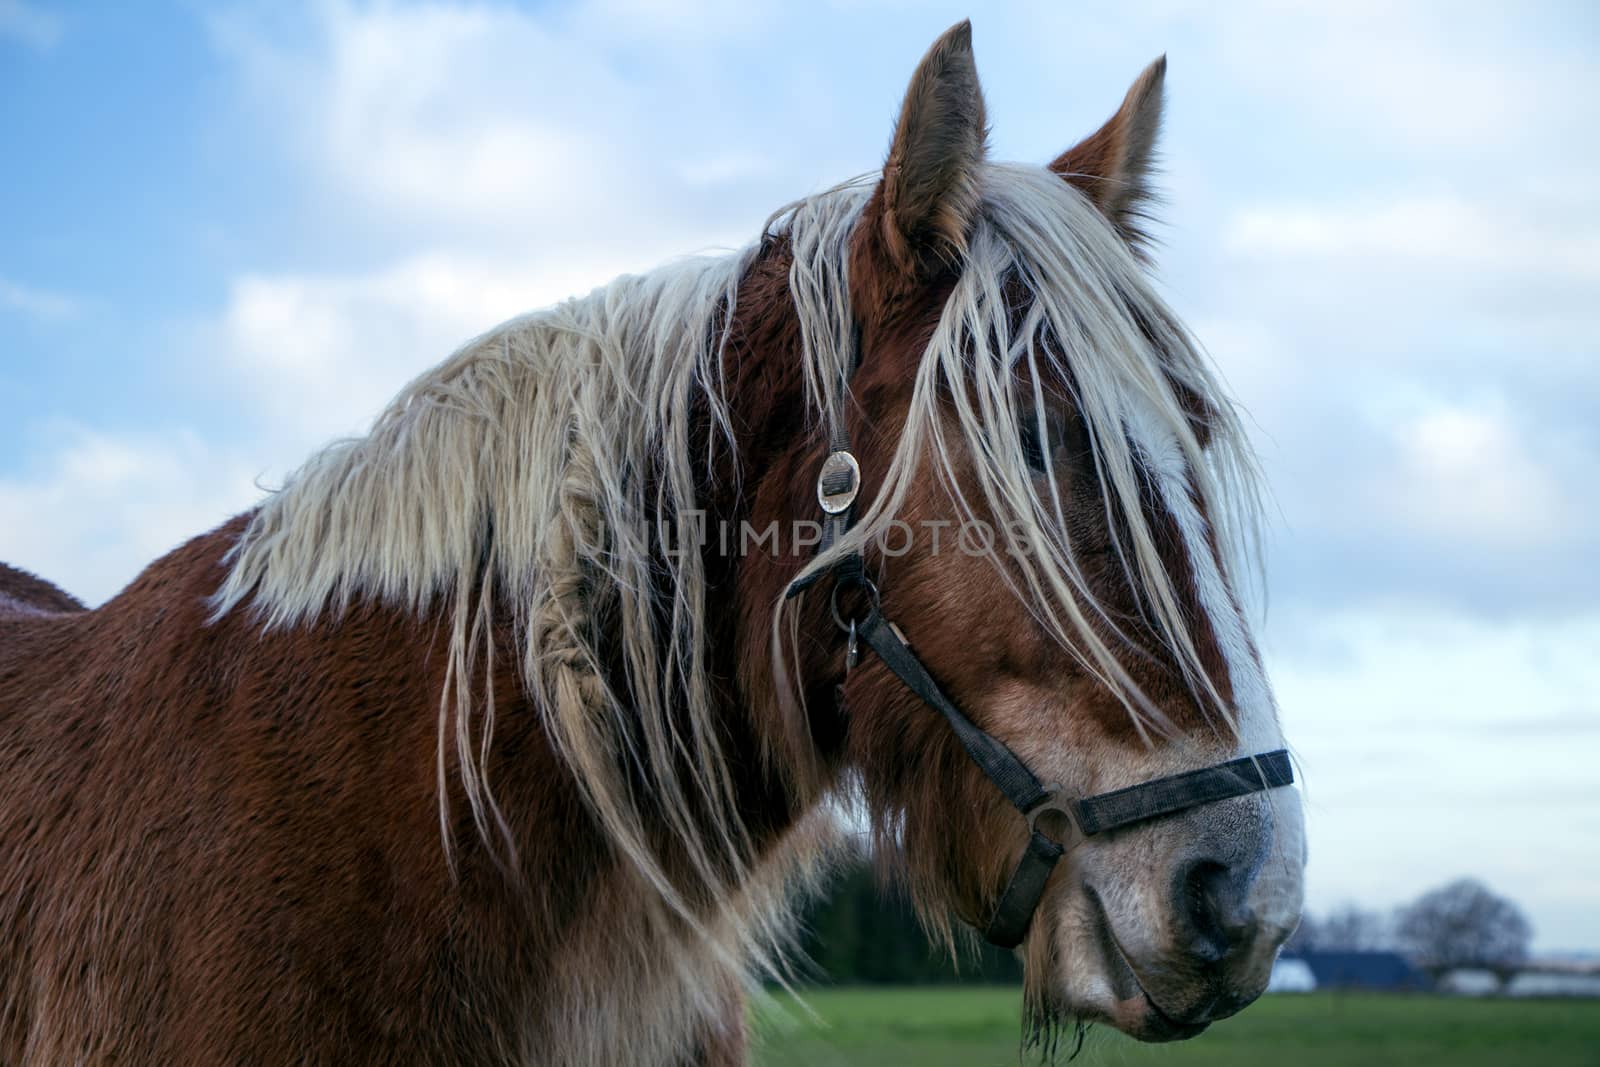 Jutland Horse Closeup, Equus ferus caballus by Mads_Hjorth_Jakobsen